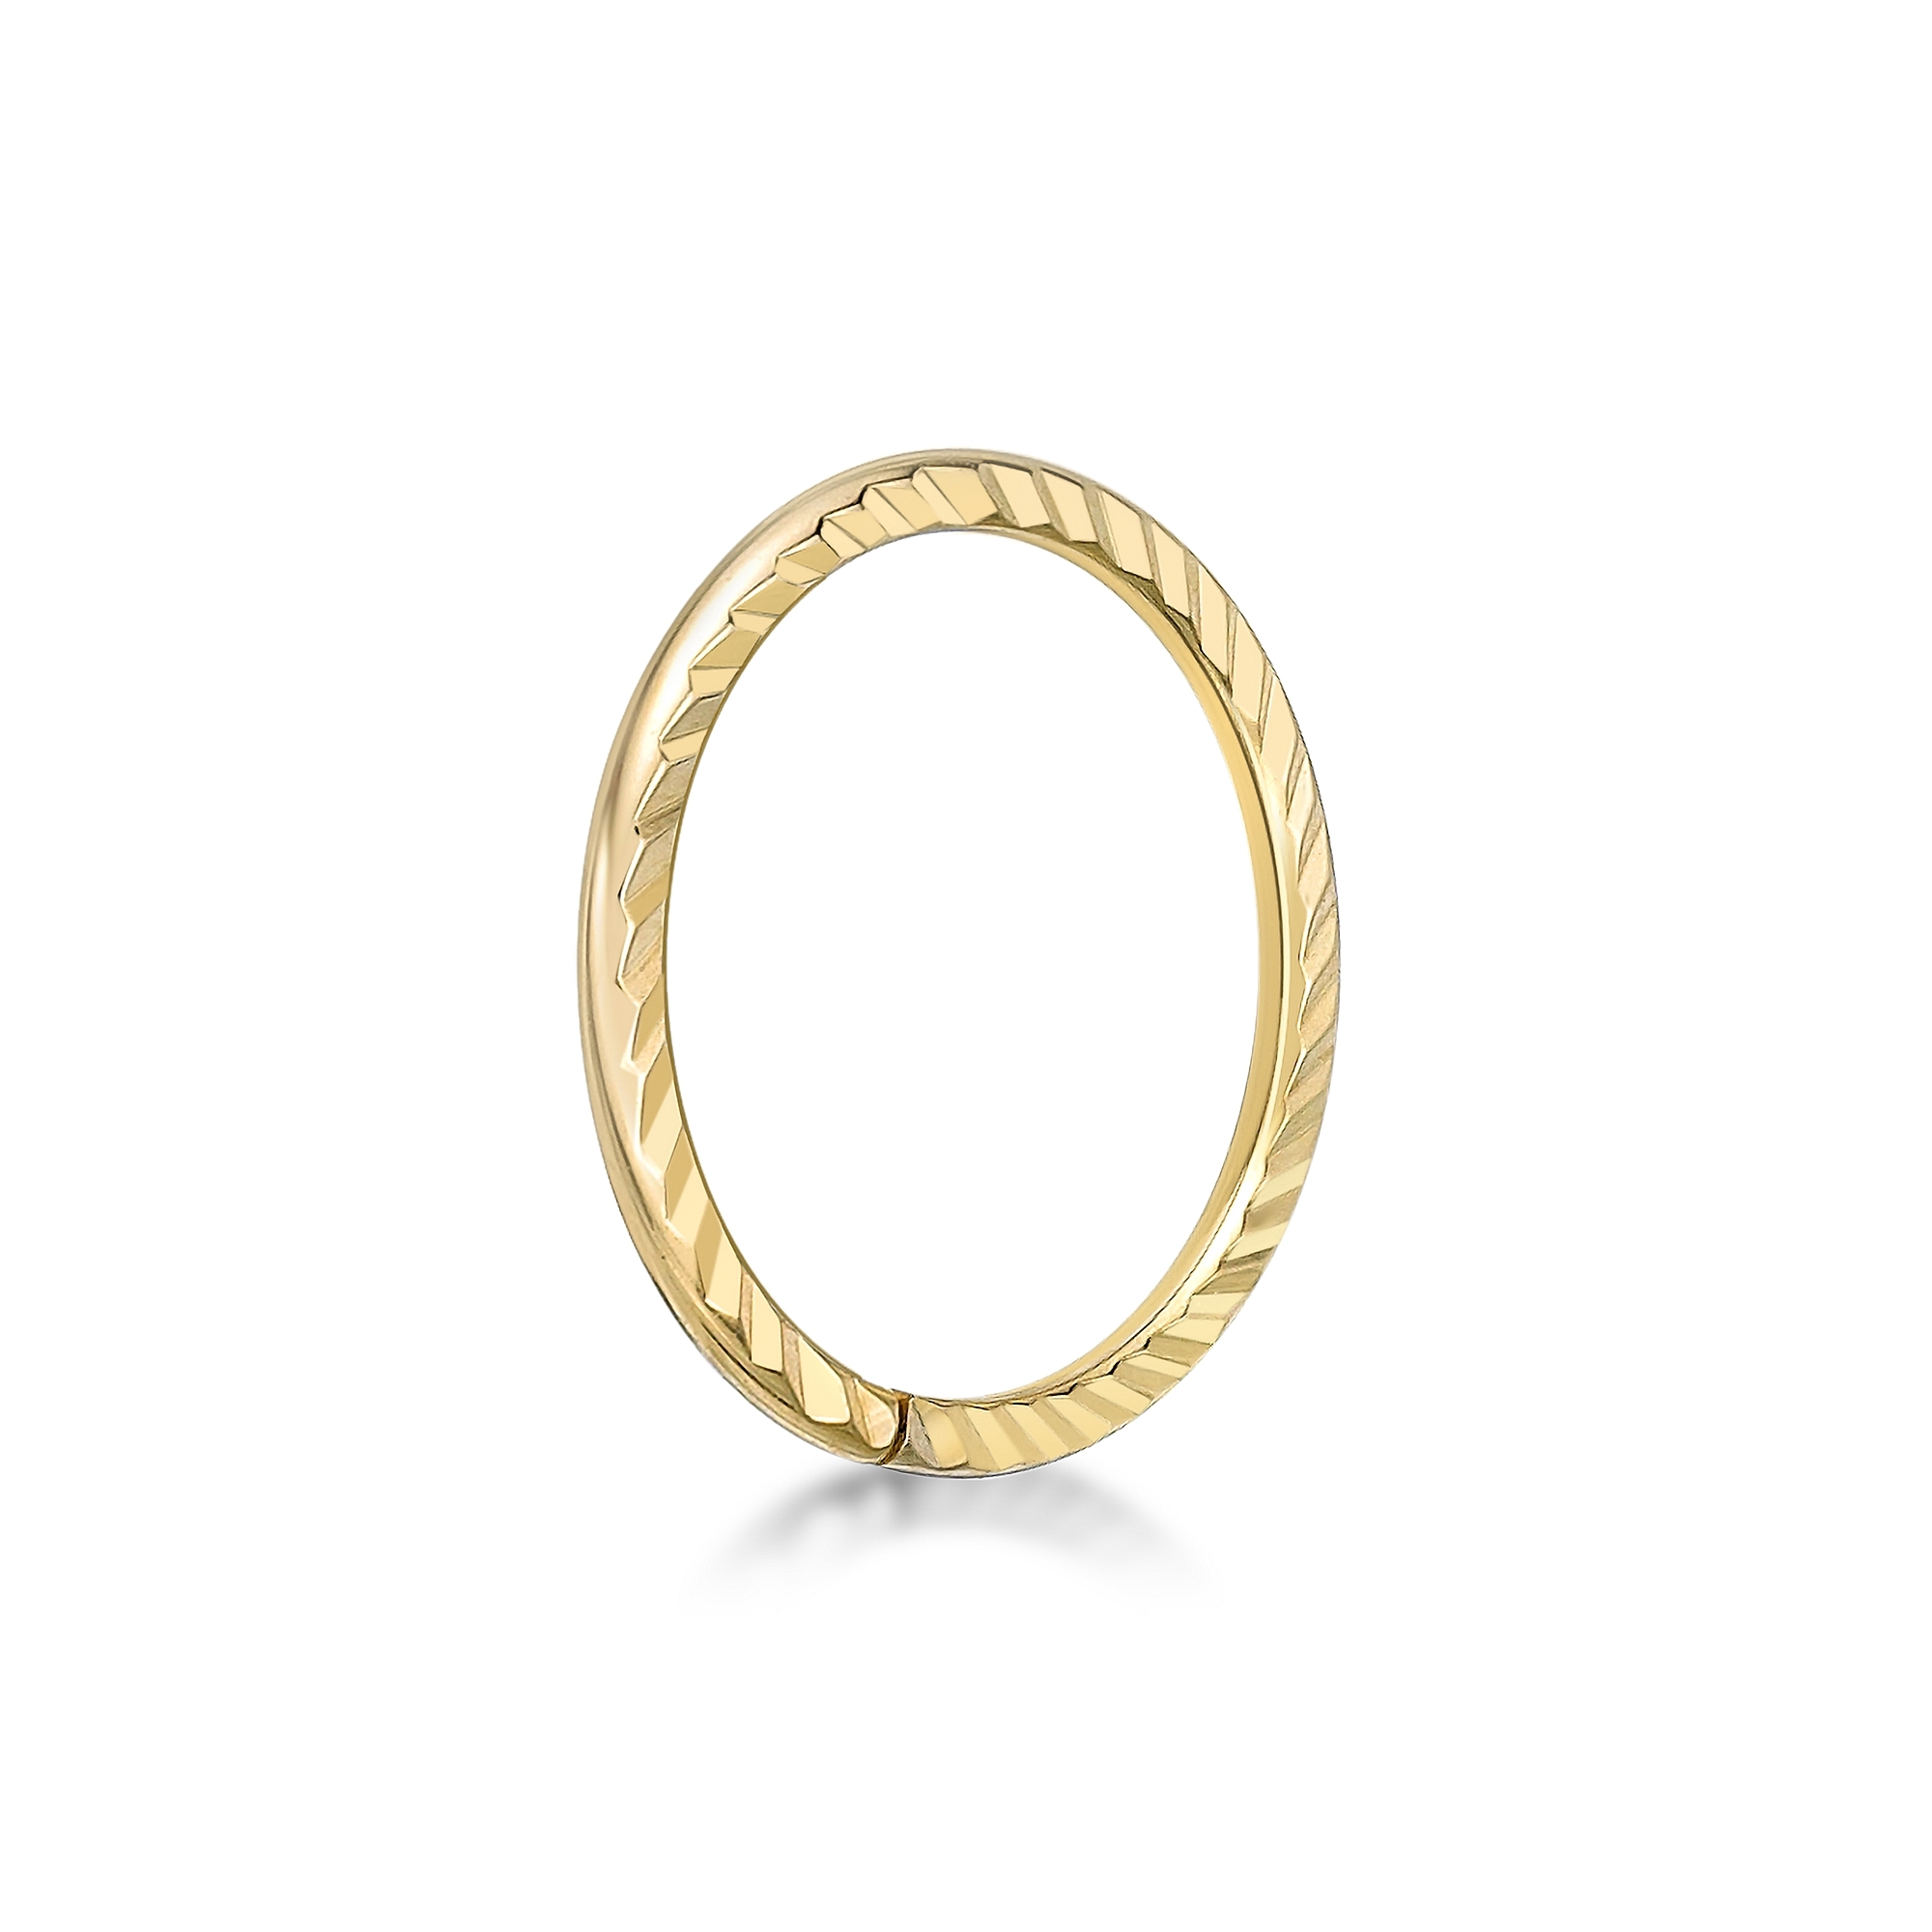 Lavari Jewelers Women's 8 MM Textured Hoop Nose Ring, 14K Yellow Gold, 20 Gauge